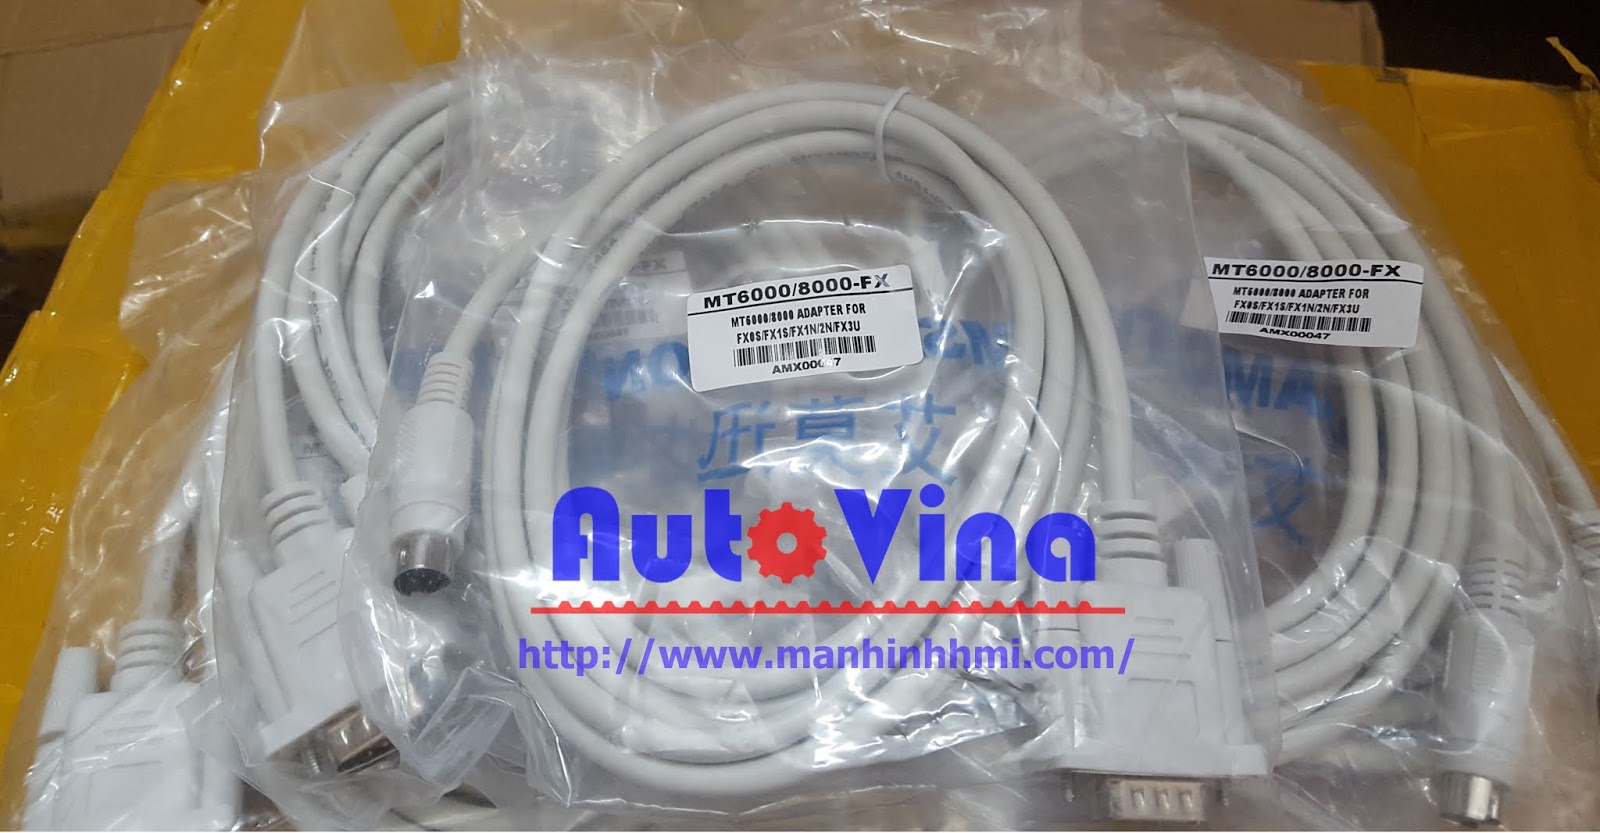 Cable kết nối HMI Weintek MT6000 và MT8000 với PLC Mitsubishi FX1N, FX2N, FX3U, FX3G